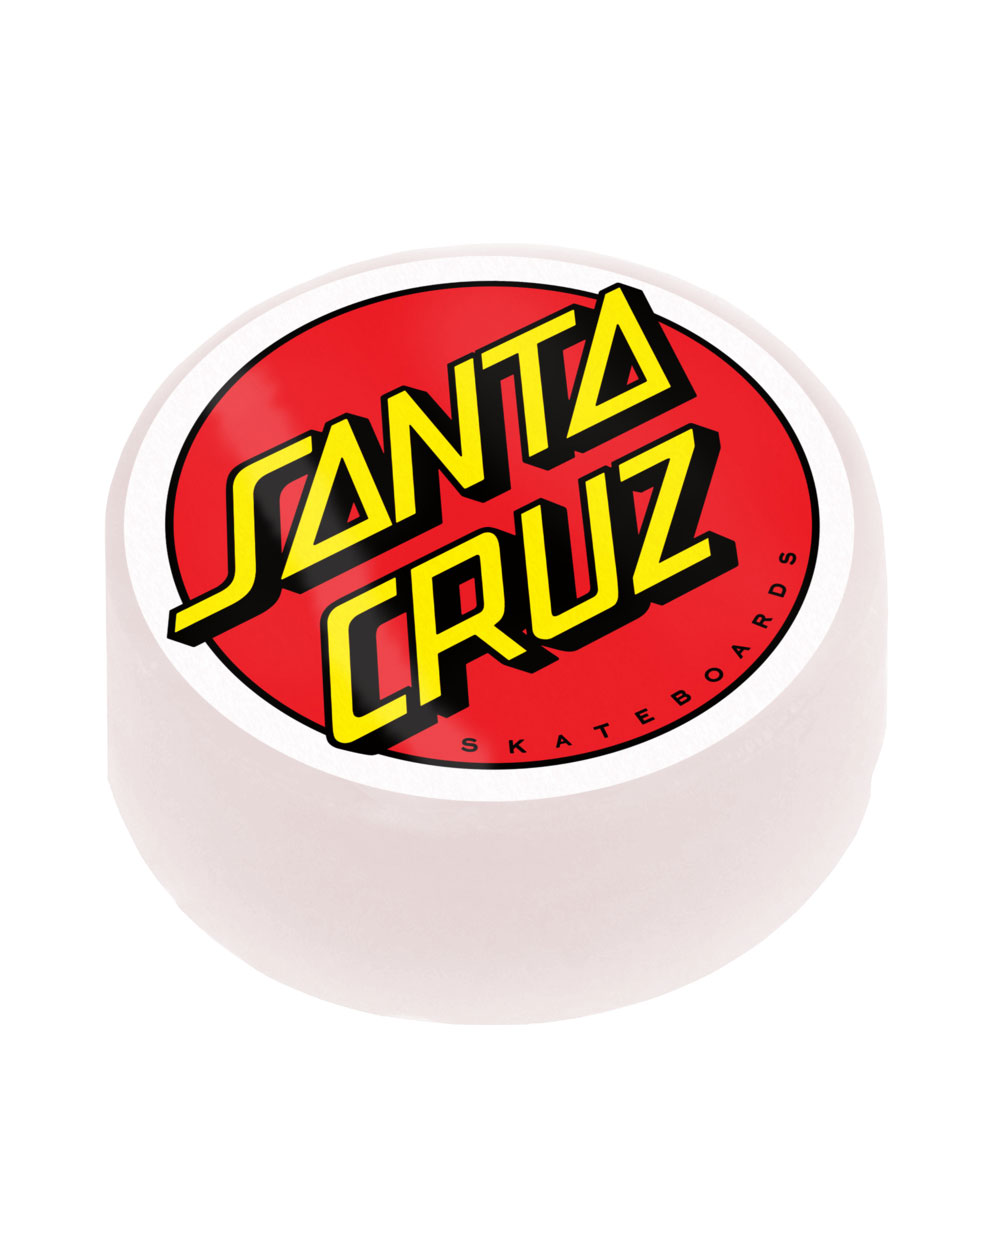 Santa Cruz Cire Skateboard Classic Dot